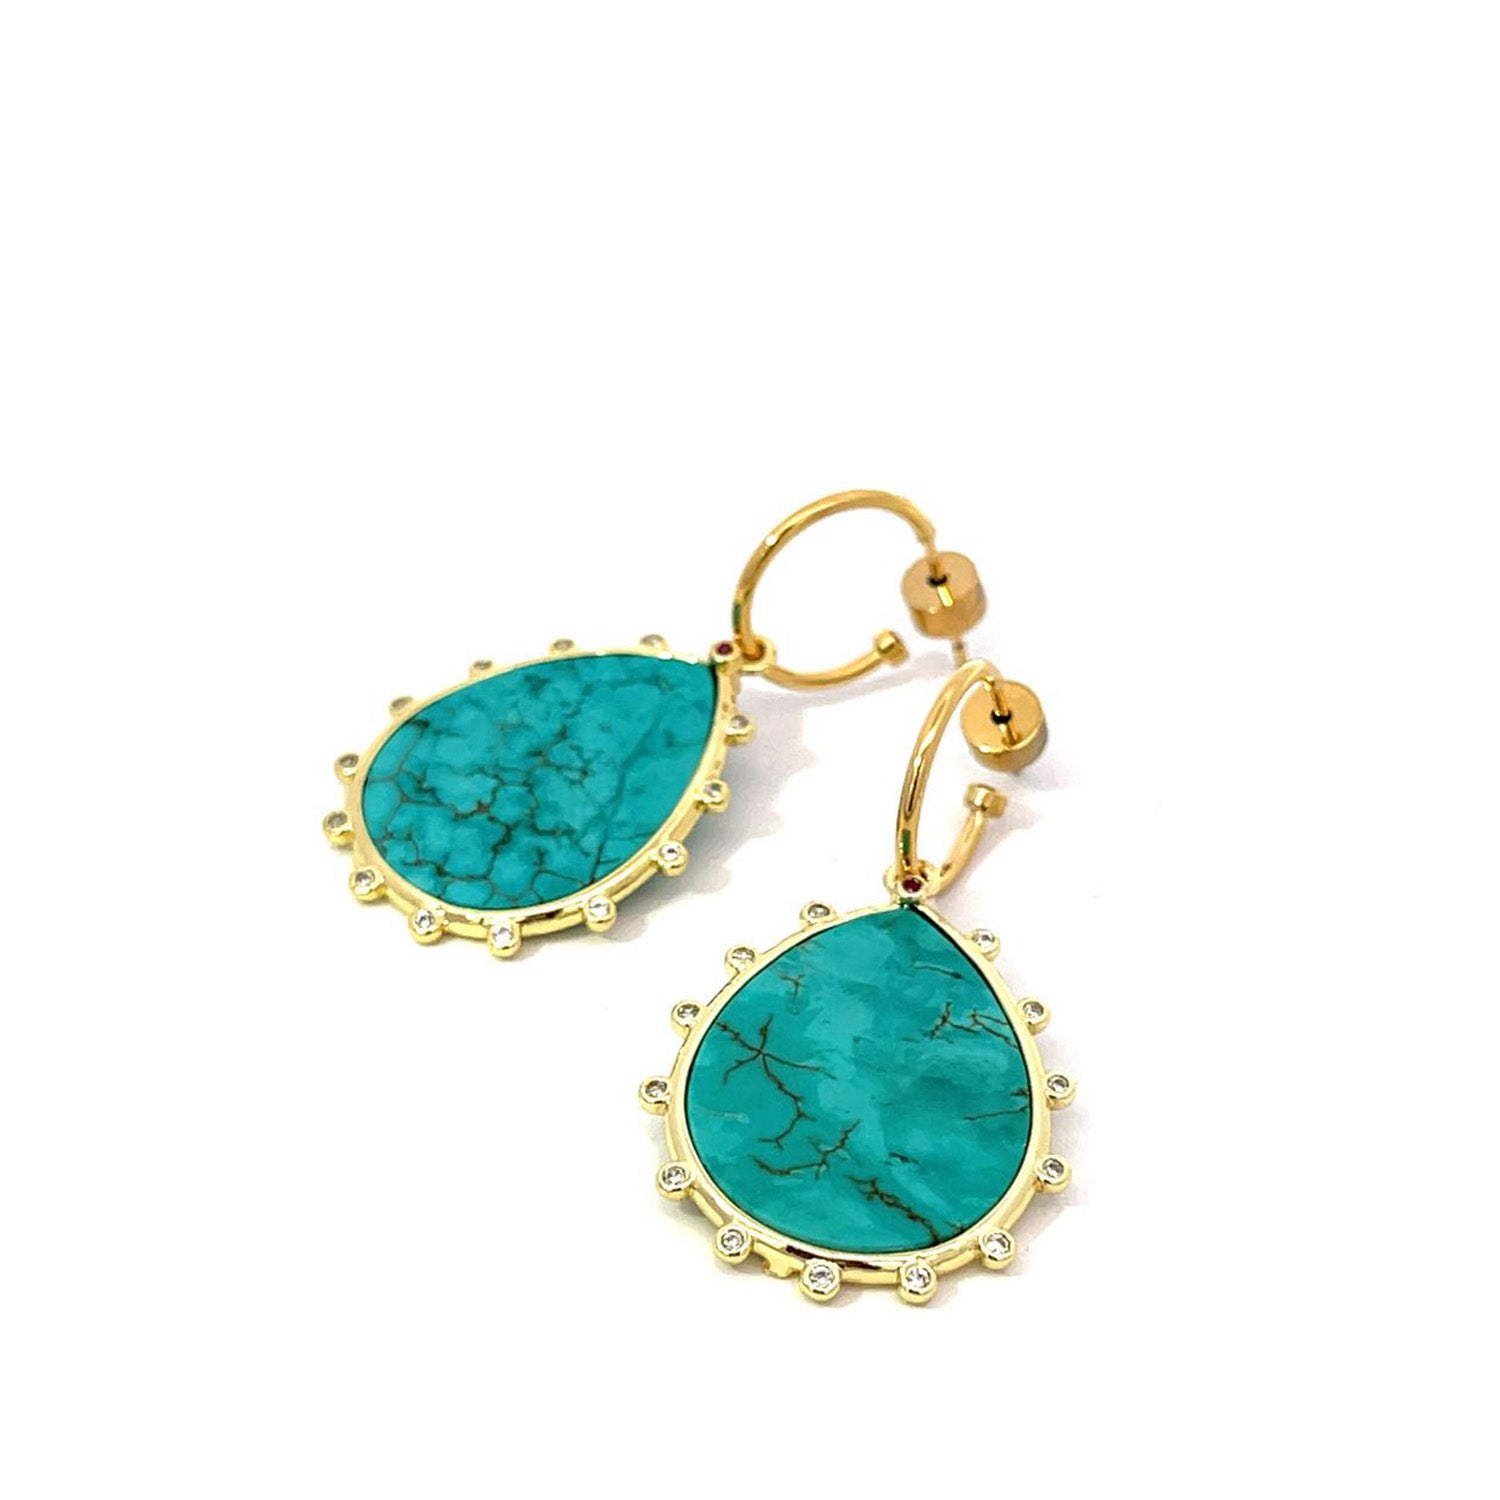 Shop Gosia Orlowska's Trendy Turquoise Earrings